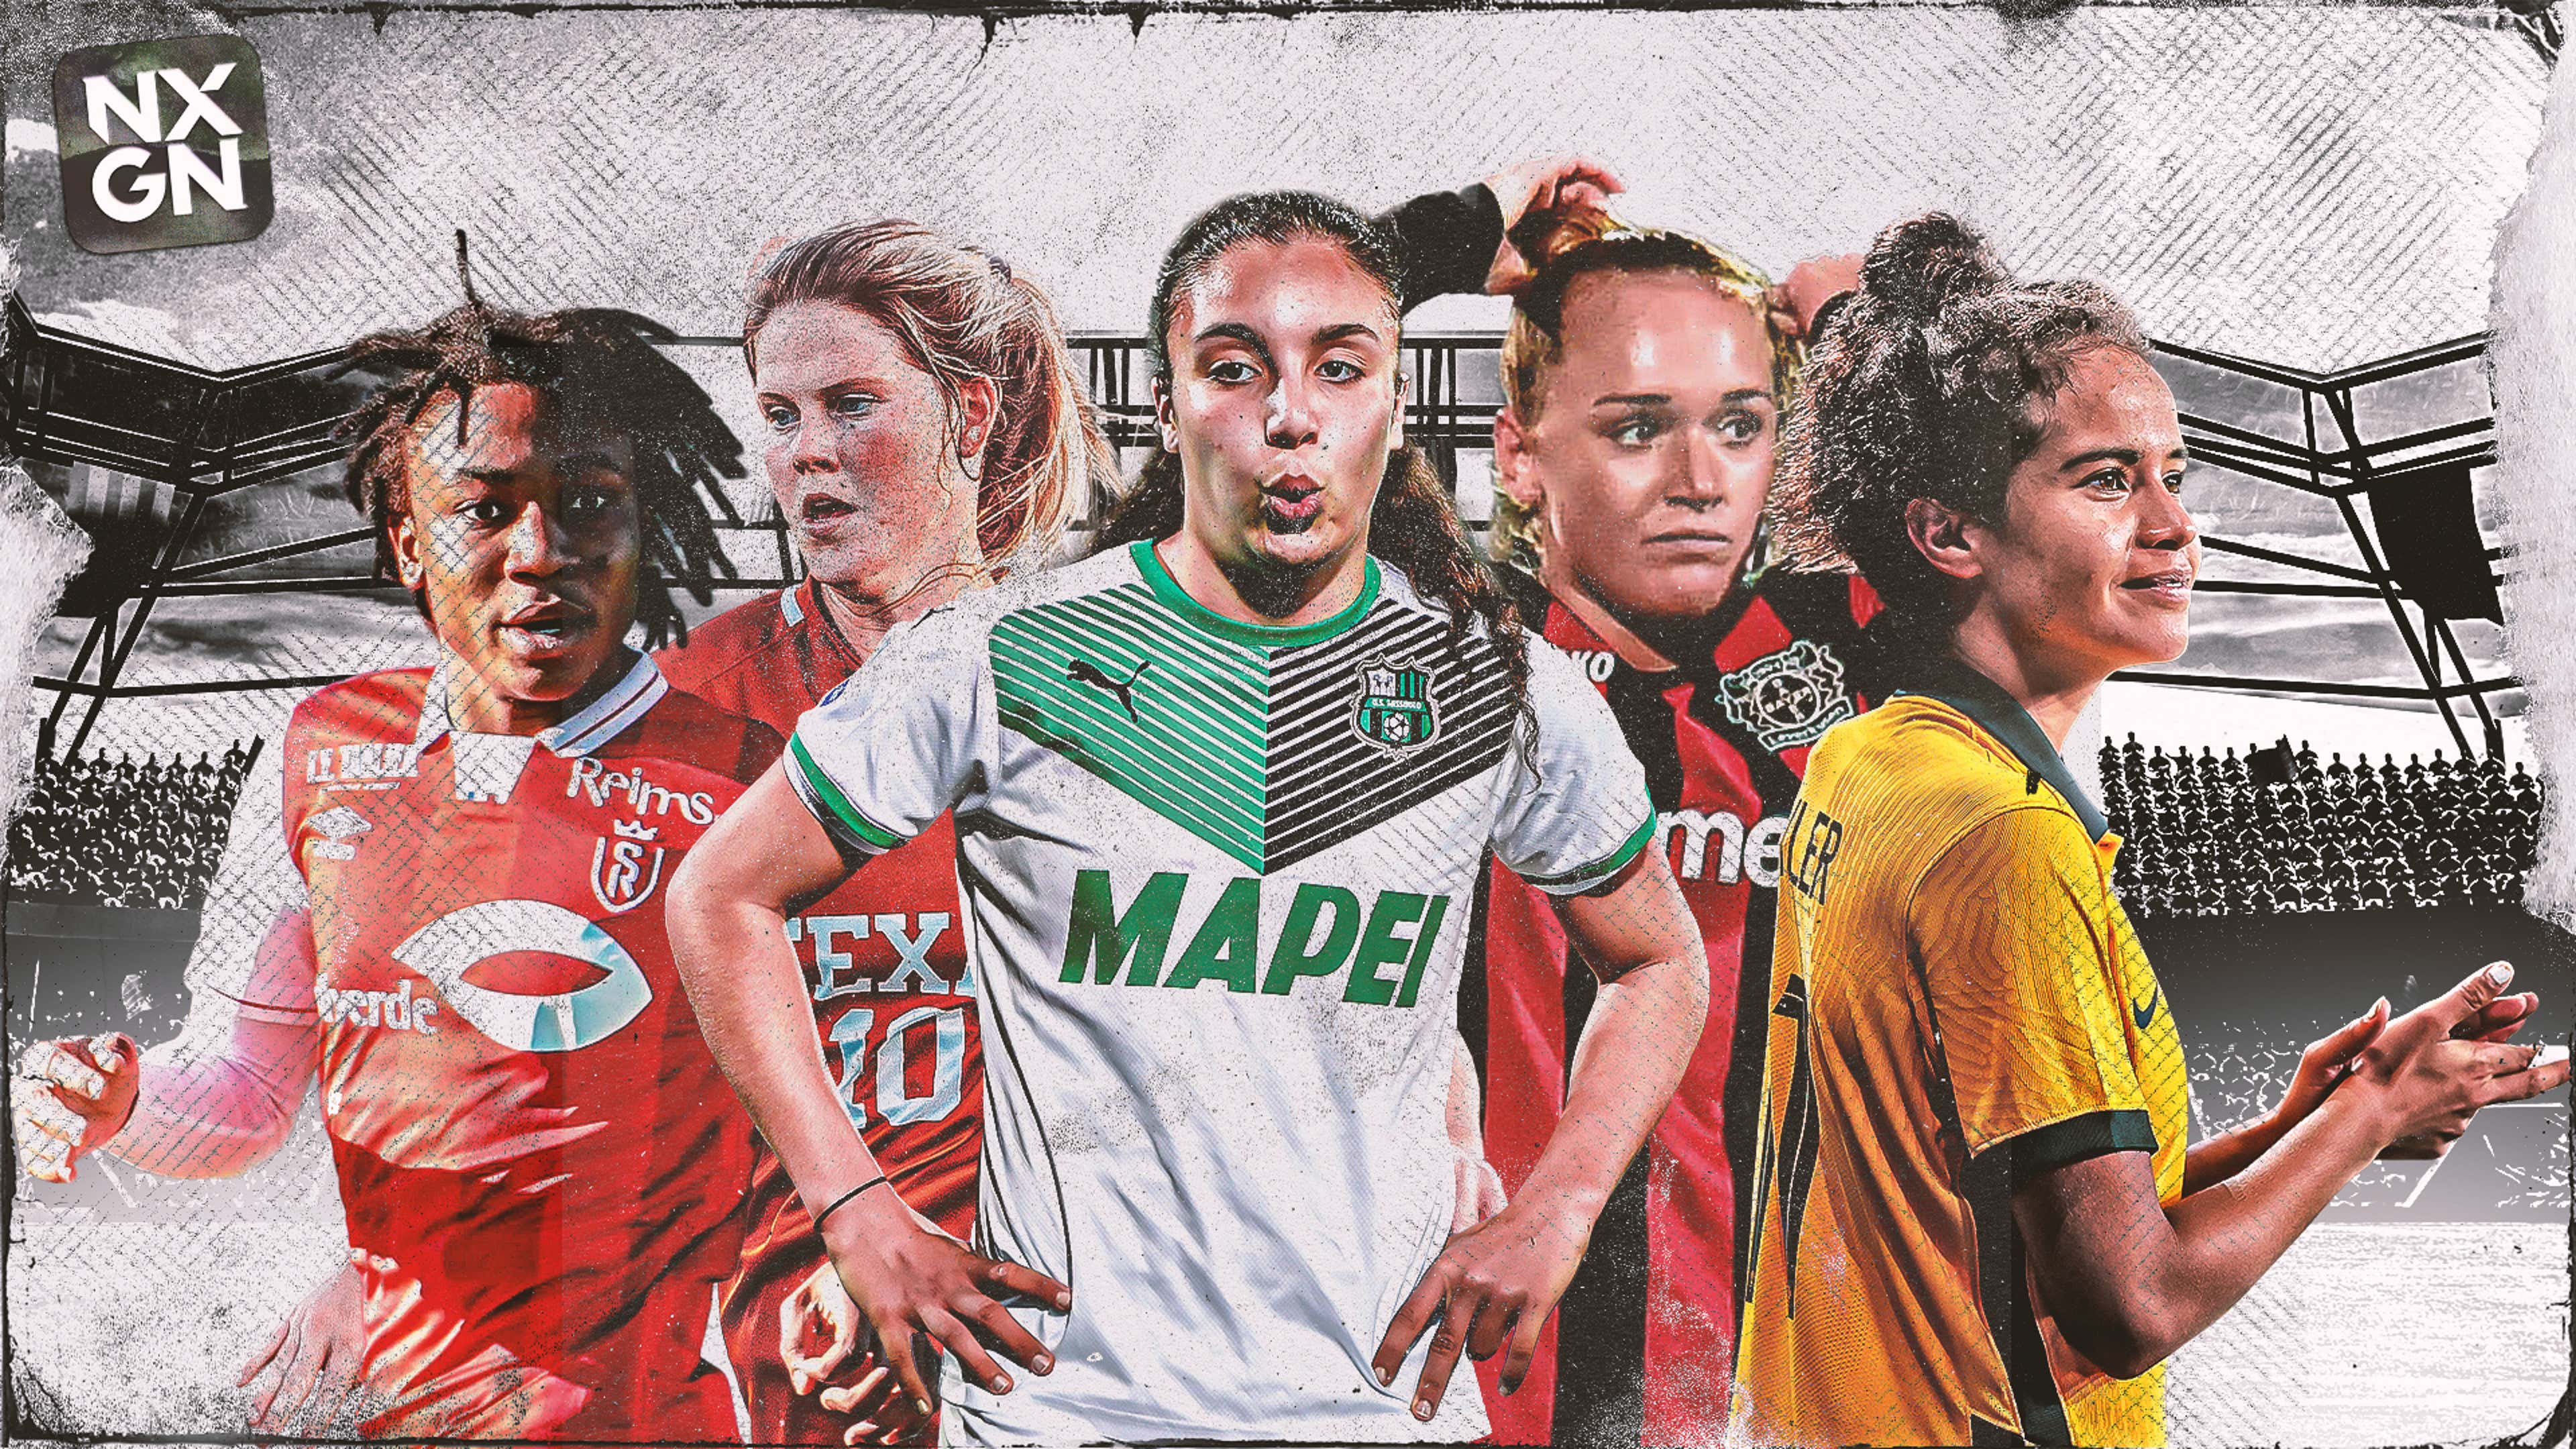 Wallpaper de futebol feminino em 2022